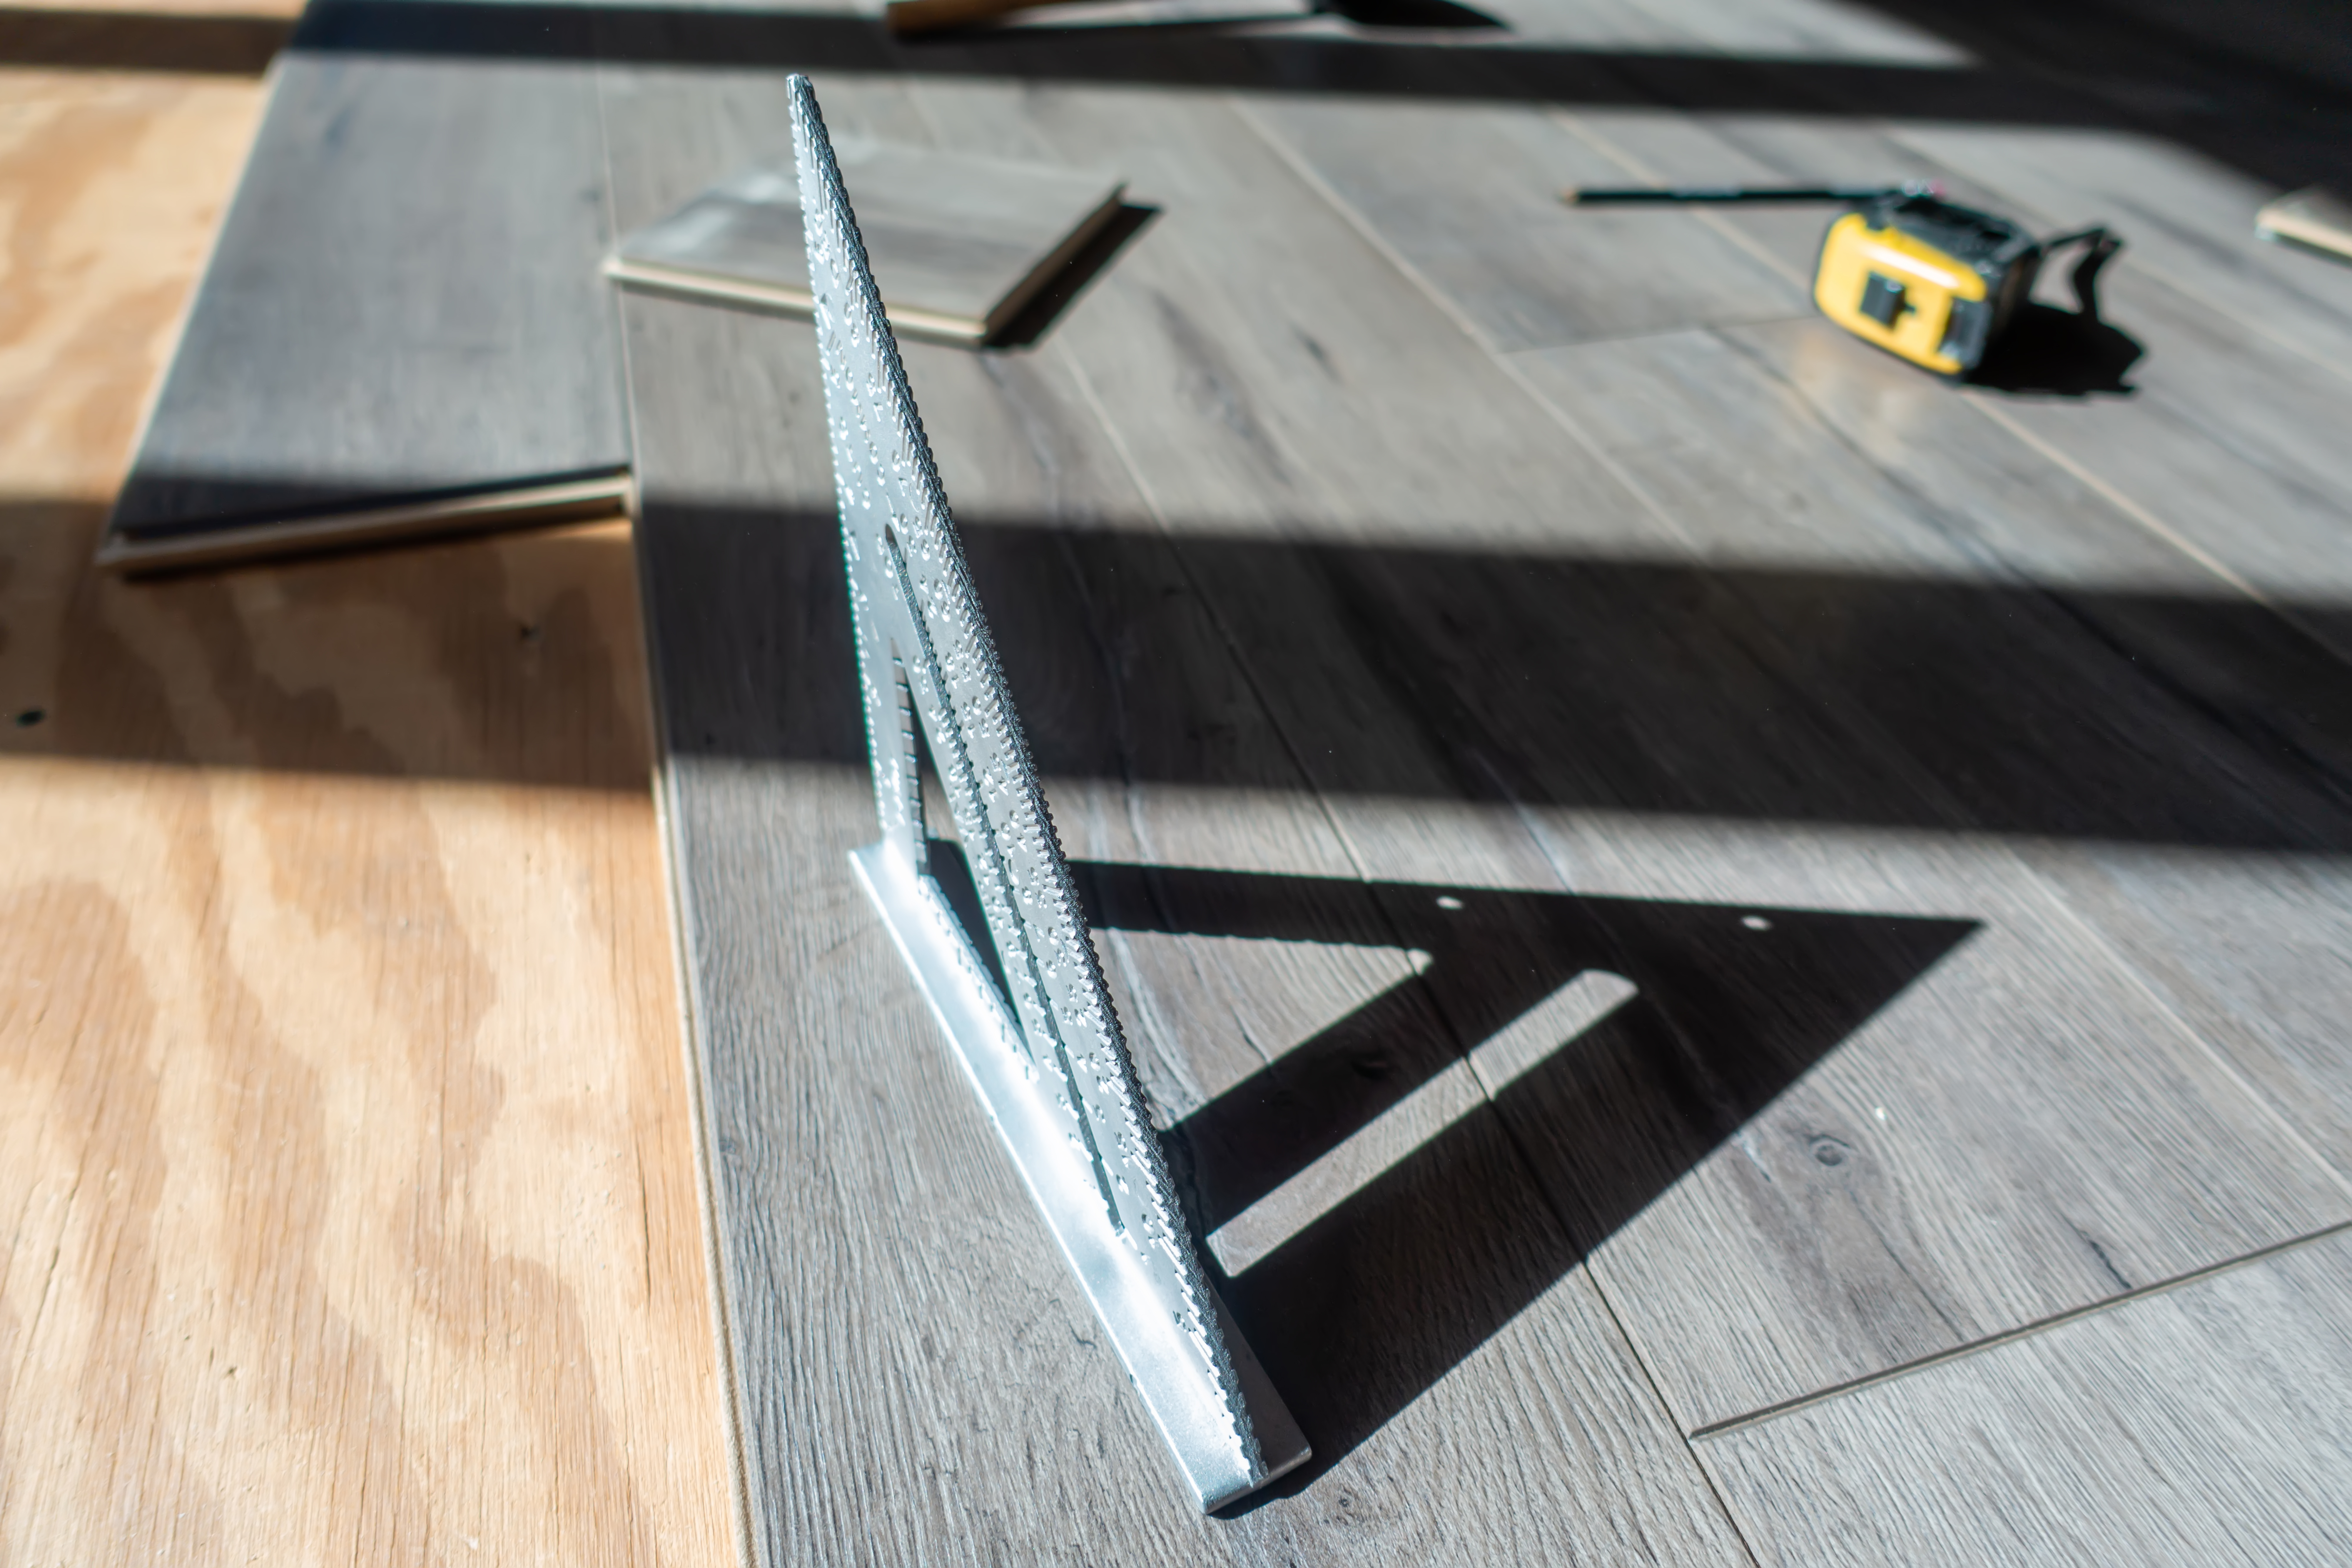 Installing rigid snap-together vinyl plank